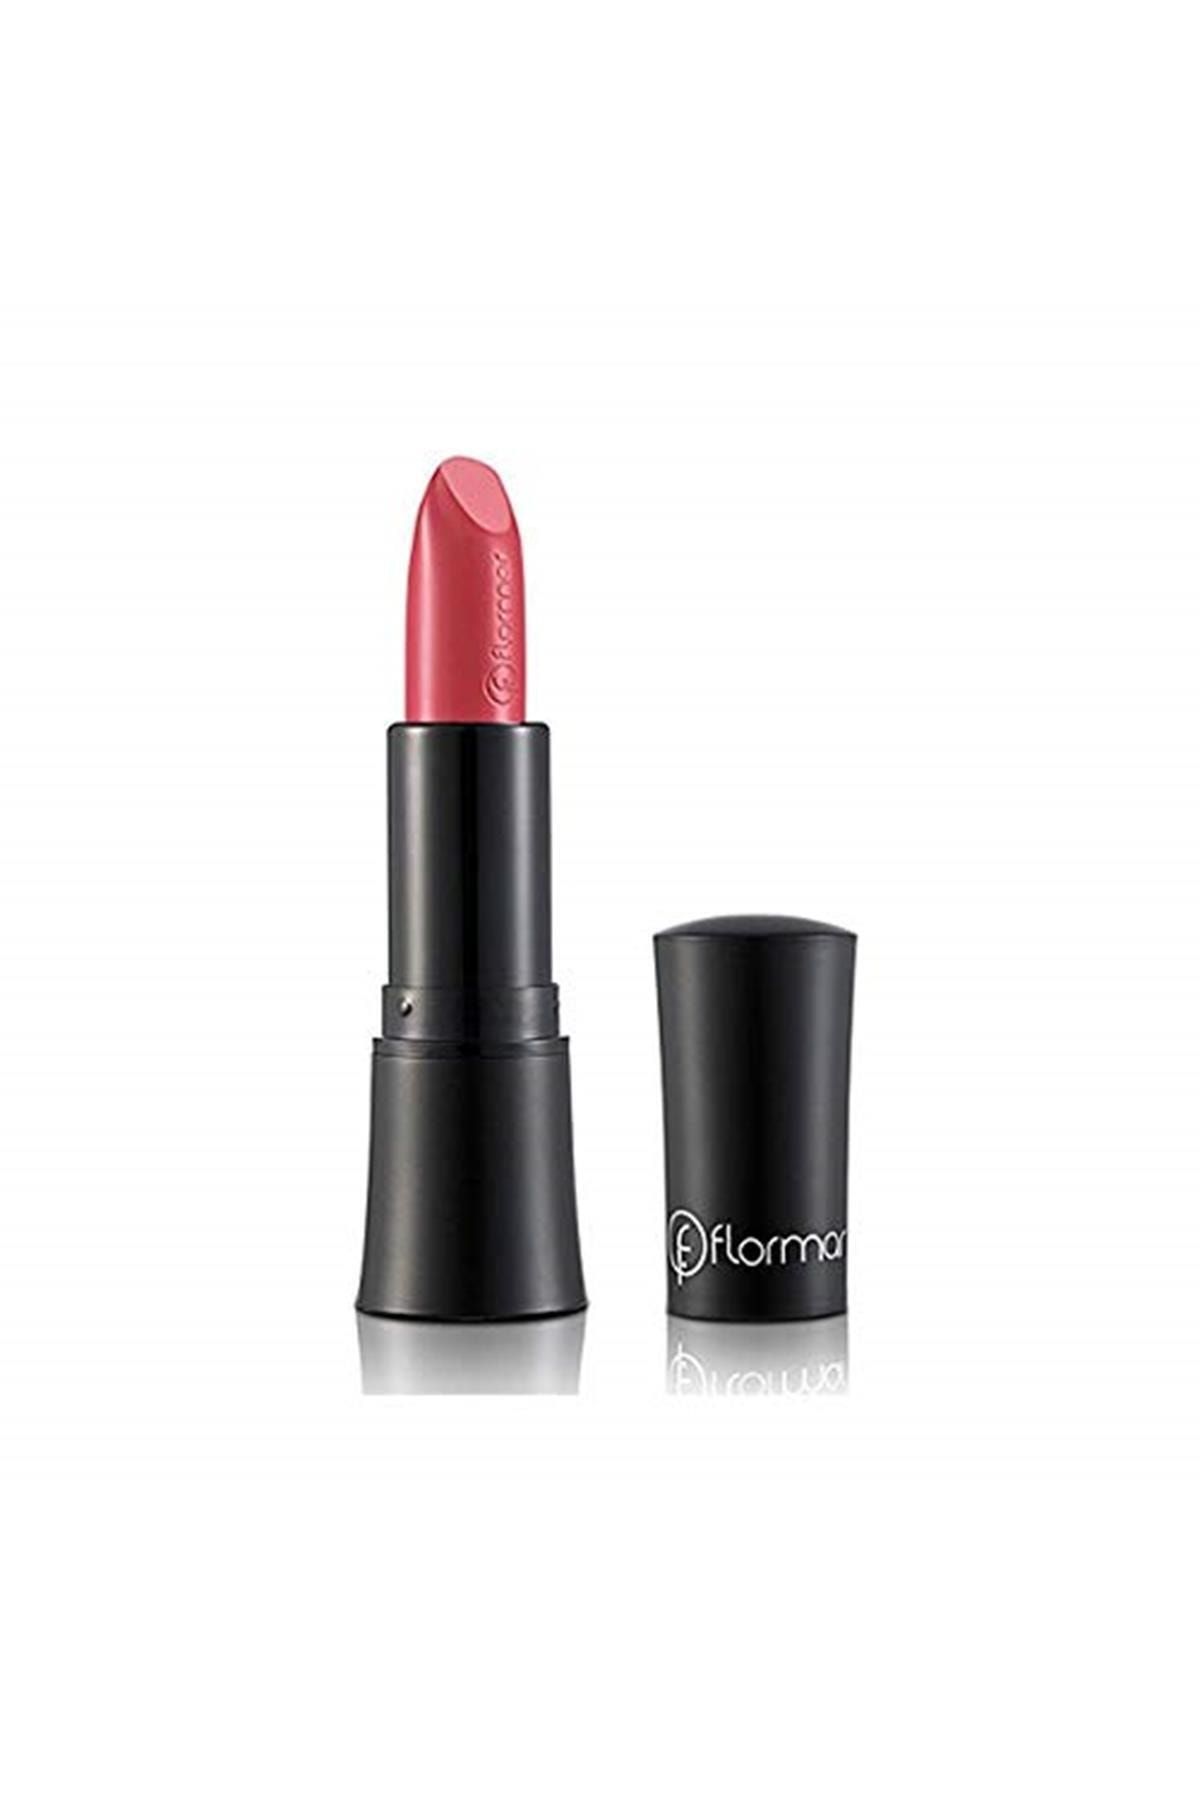 Flormar Parlak Stick Ruj (CANLI PEMBE) - Supershine Lipstick - 503 Pink Perfectionism - 8690604033232